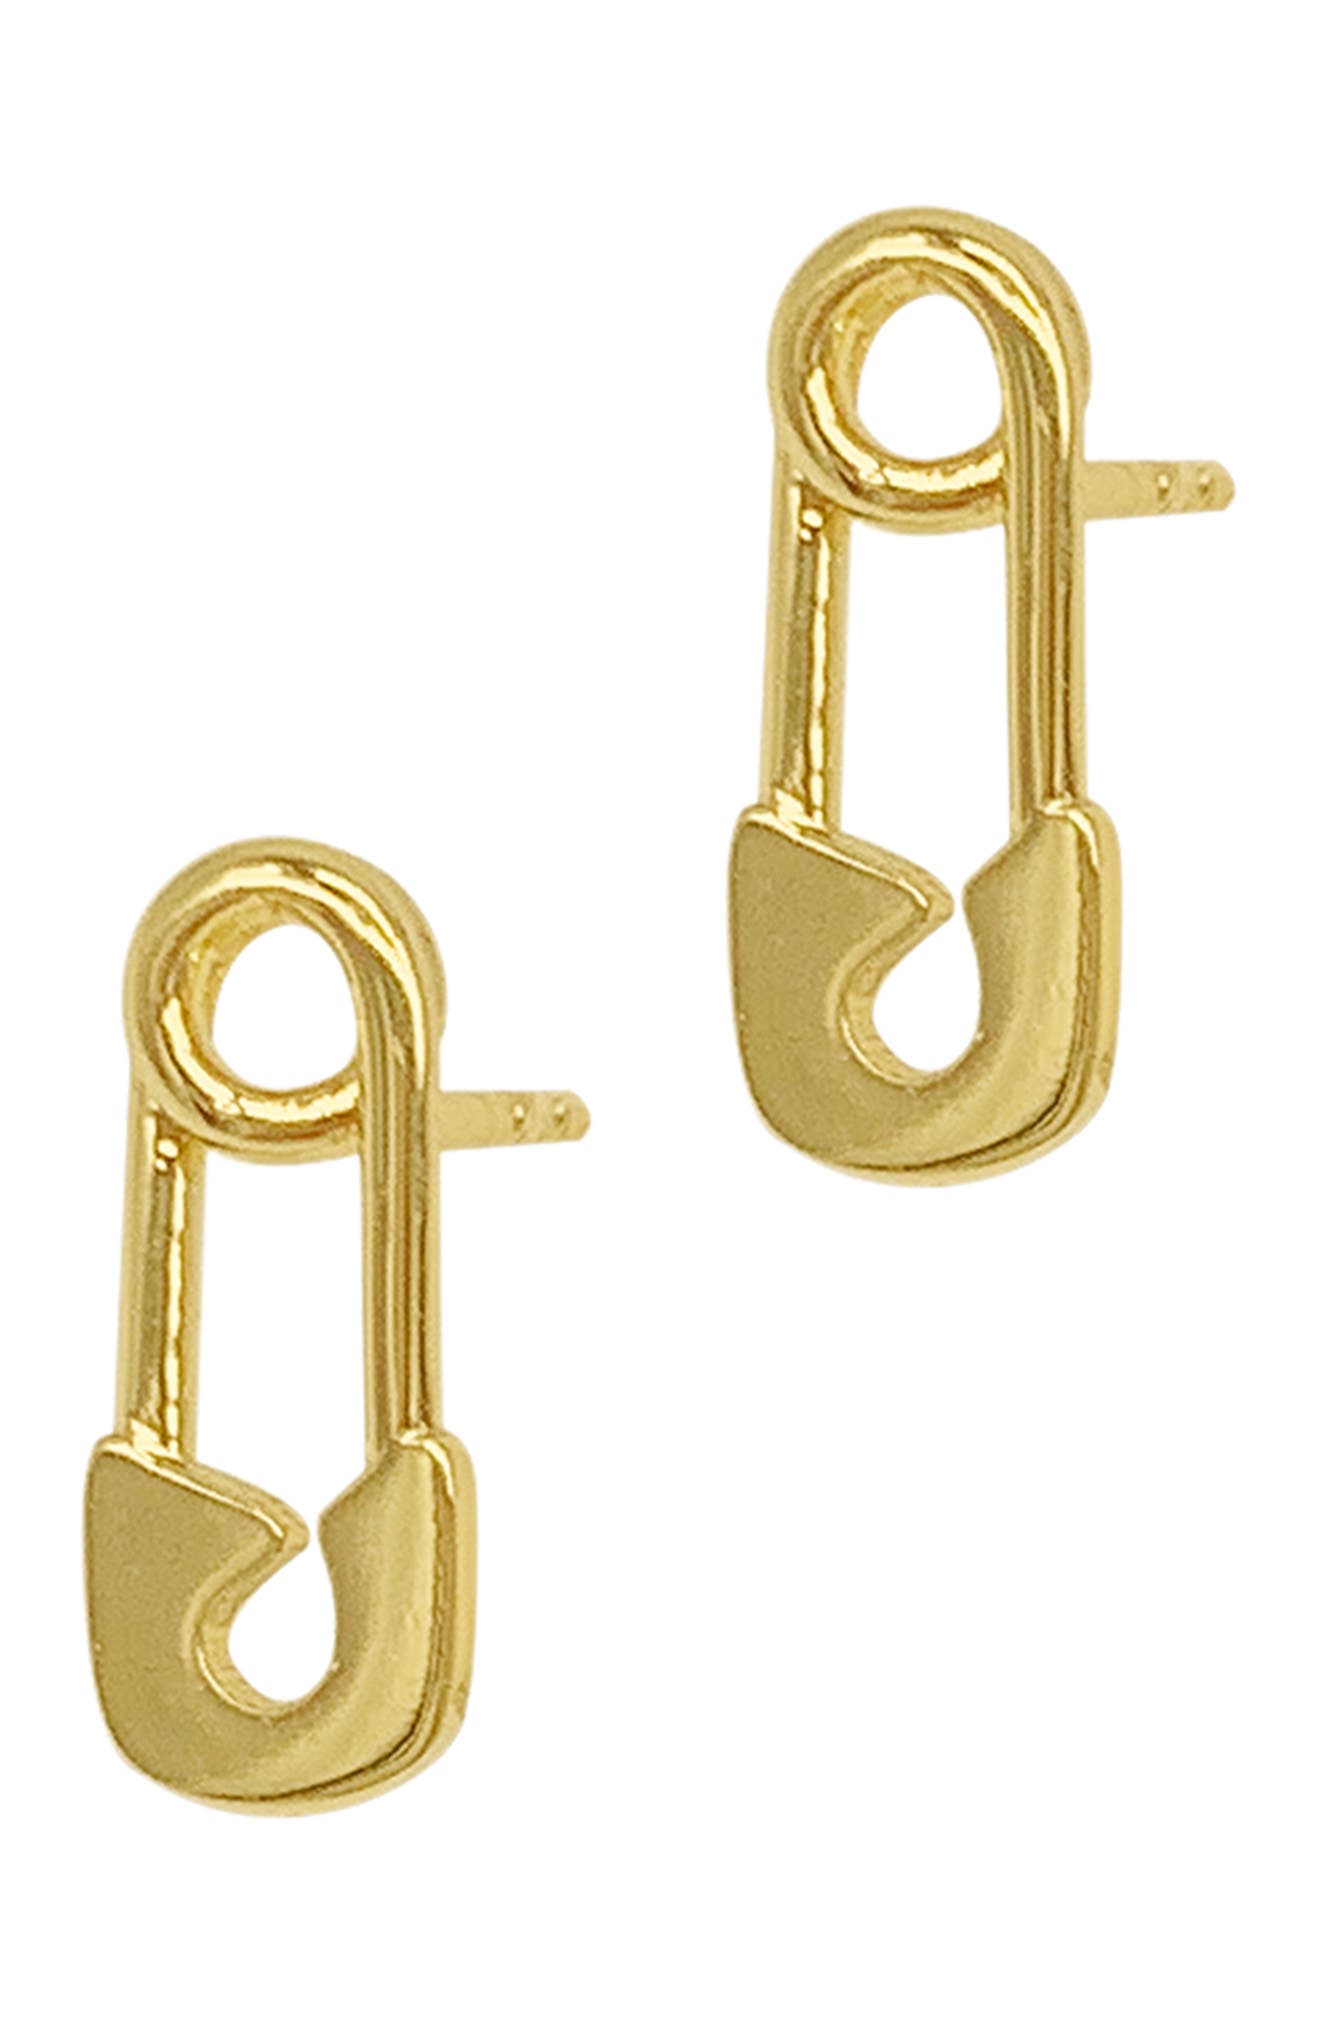 14K Yellow Gold Flip Flop Earrings Approximate Measurements 12mm x 5mm